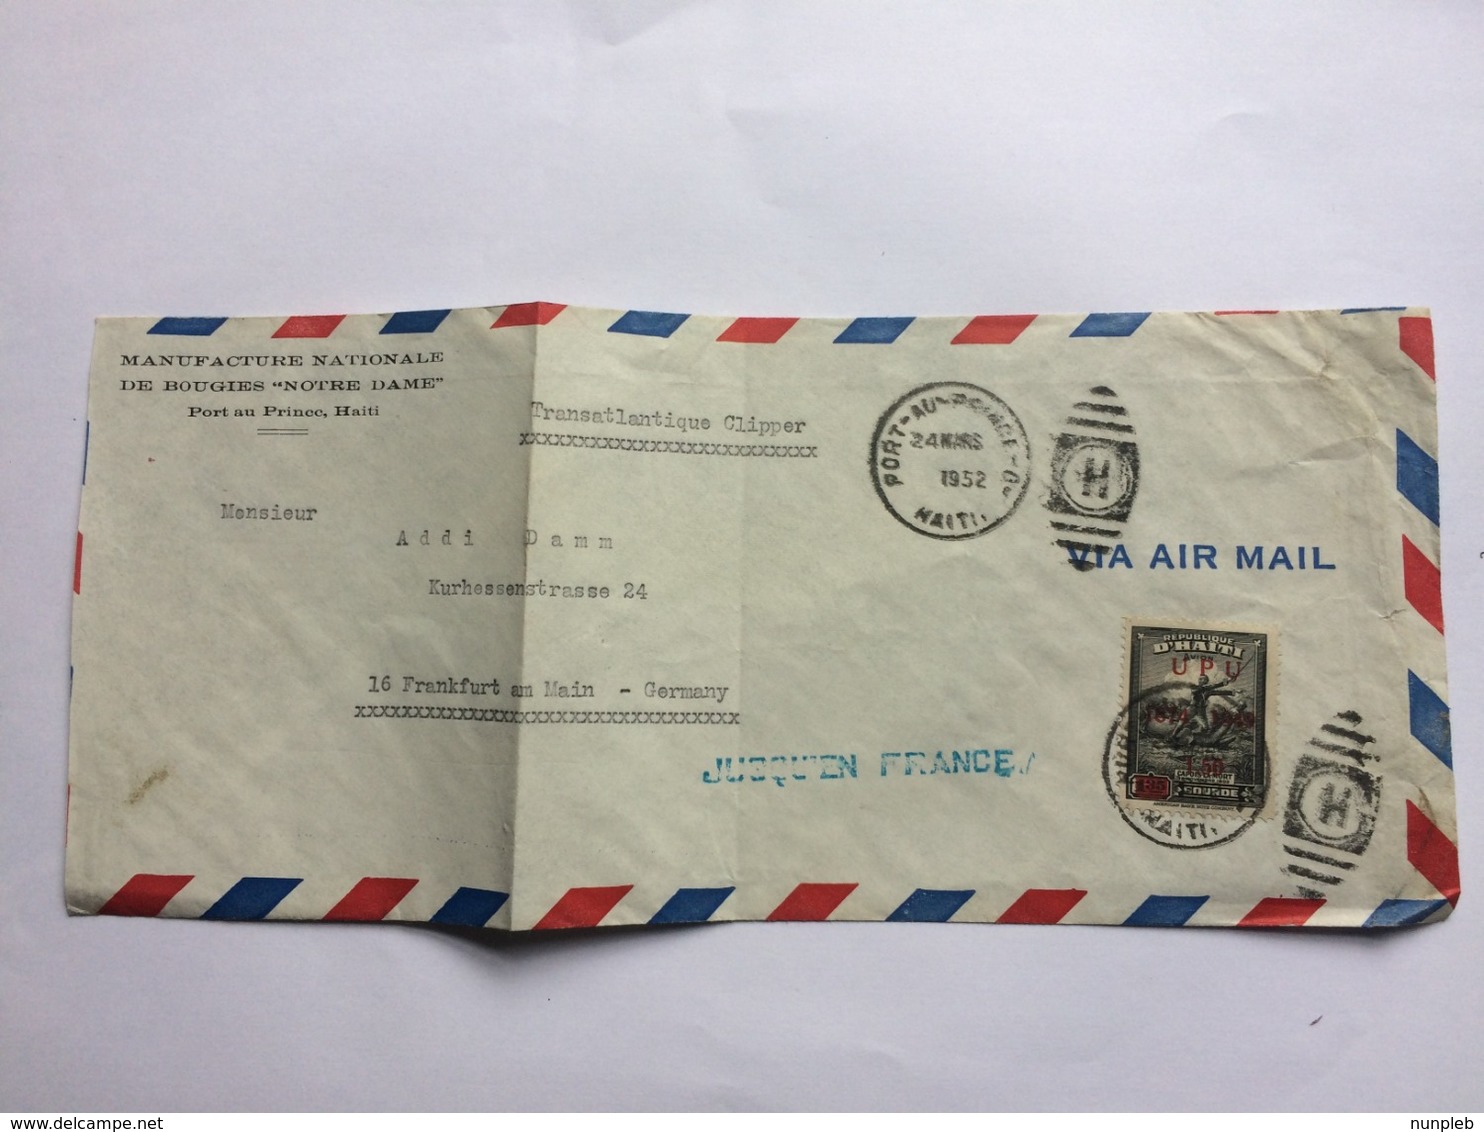 HAITI 1952 Air Mail Cover Port Au Prince To Frankfurt Germany With `Jusqu`en France` Cachet - Haïti